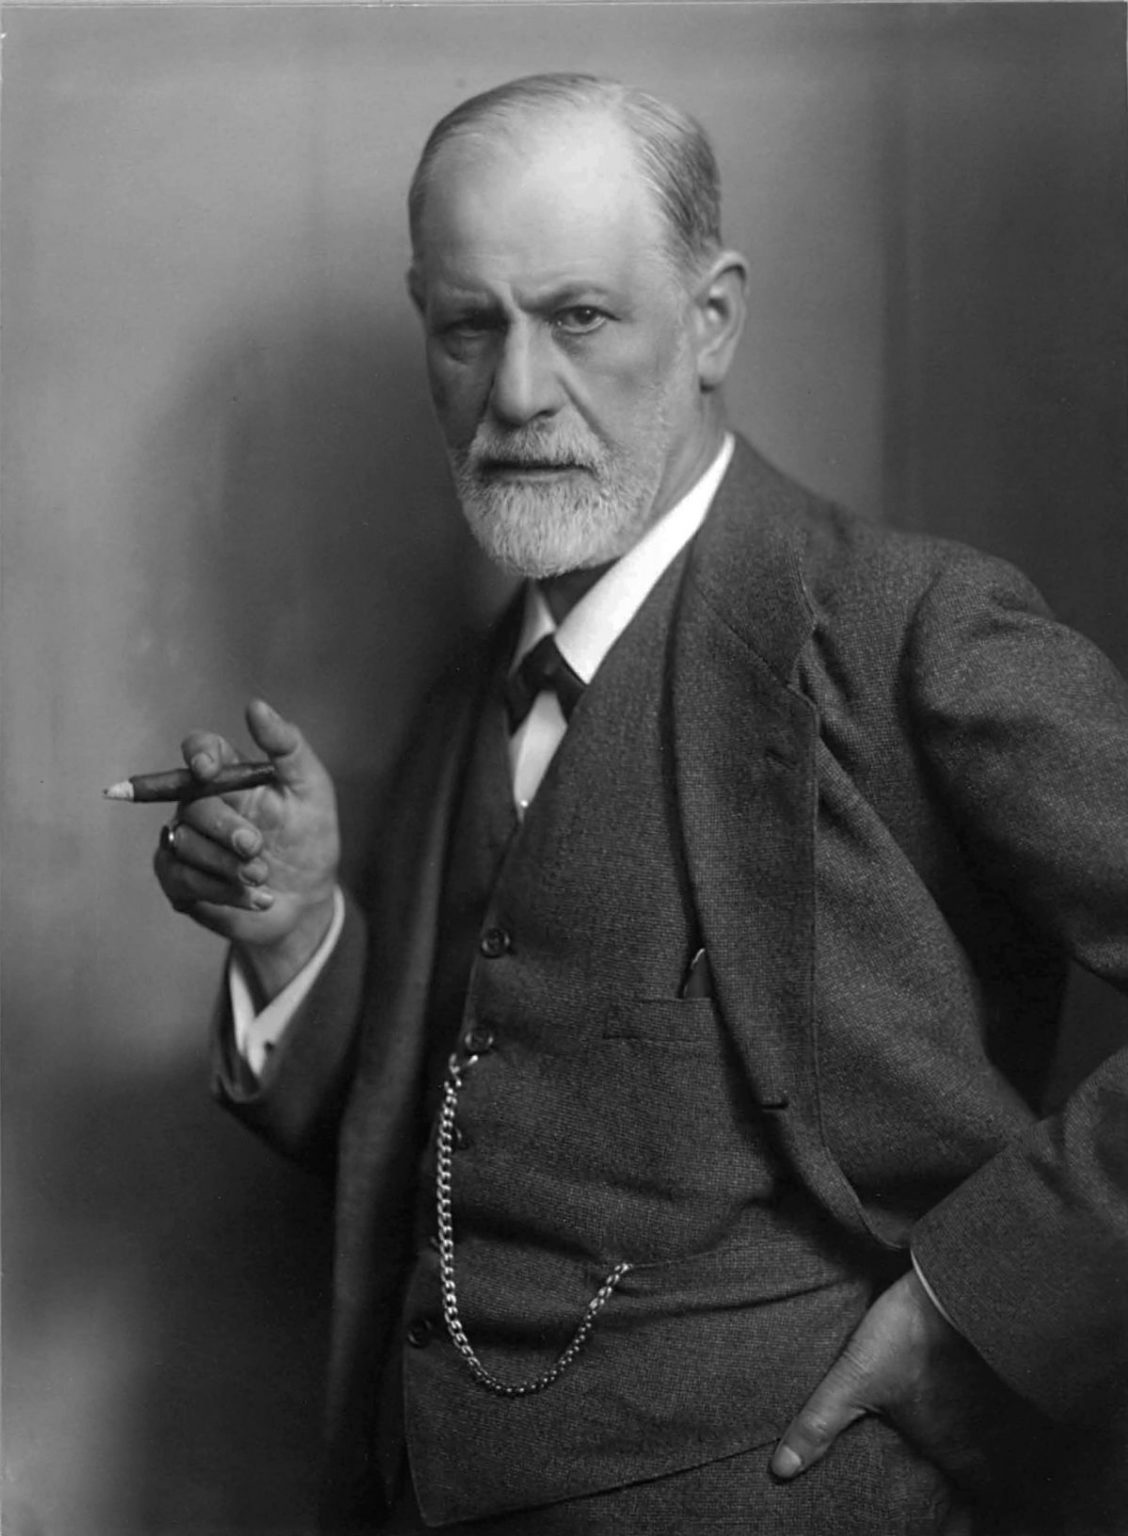 Sigmund_Freud,_by_Max_Halberstadt_(cropped)